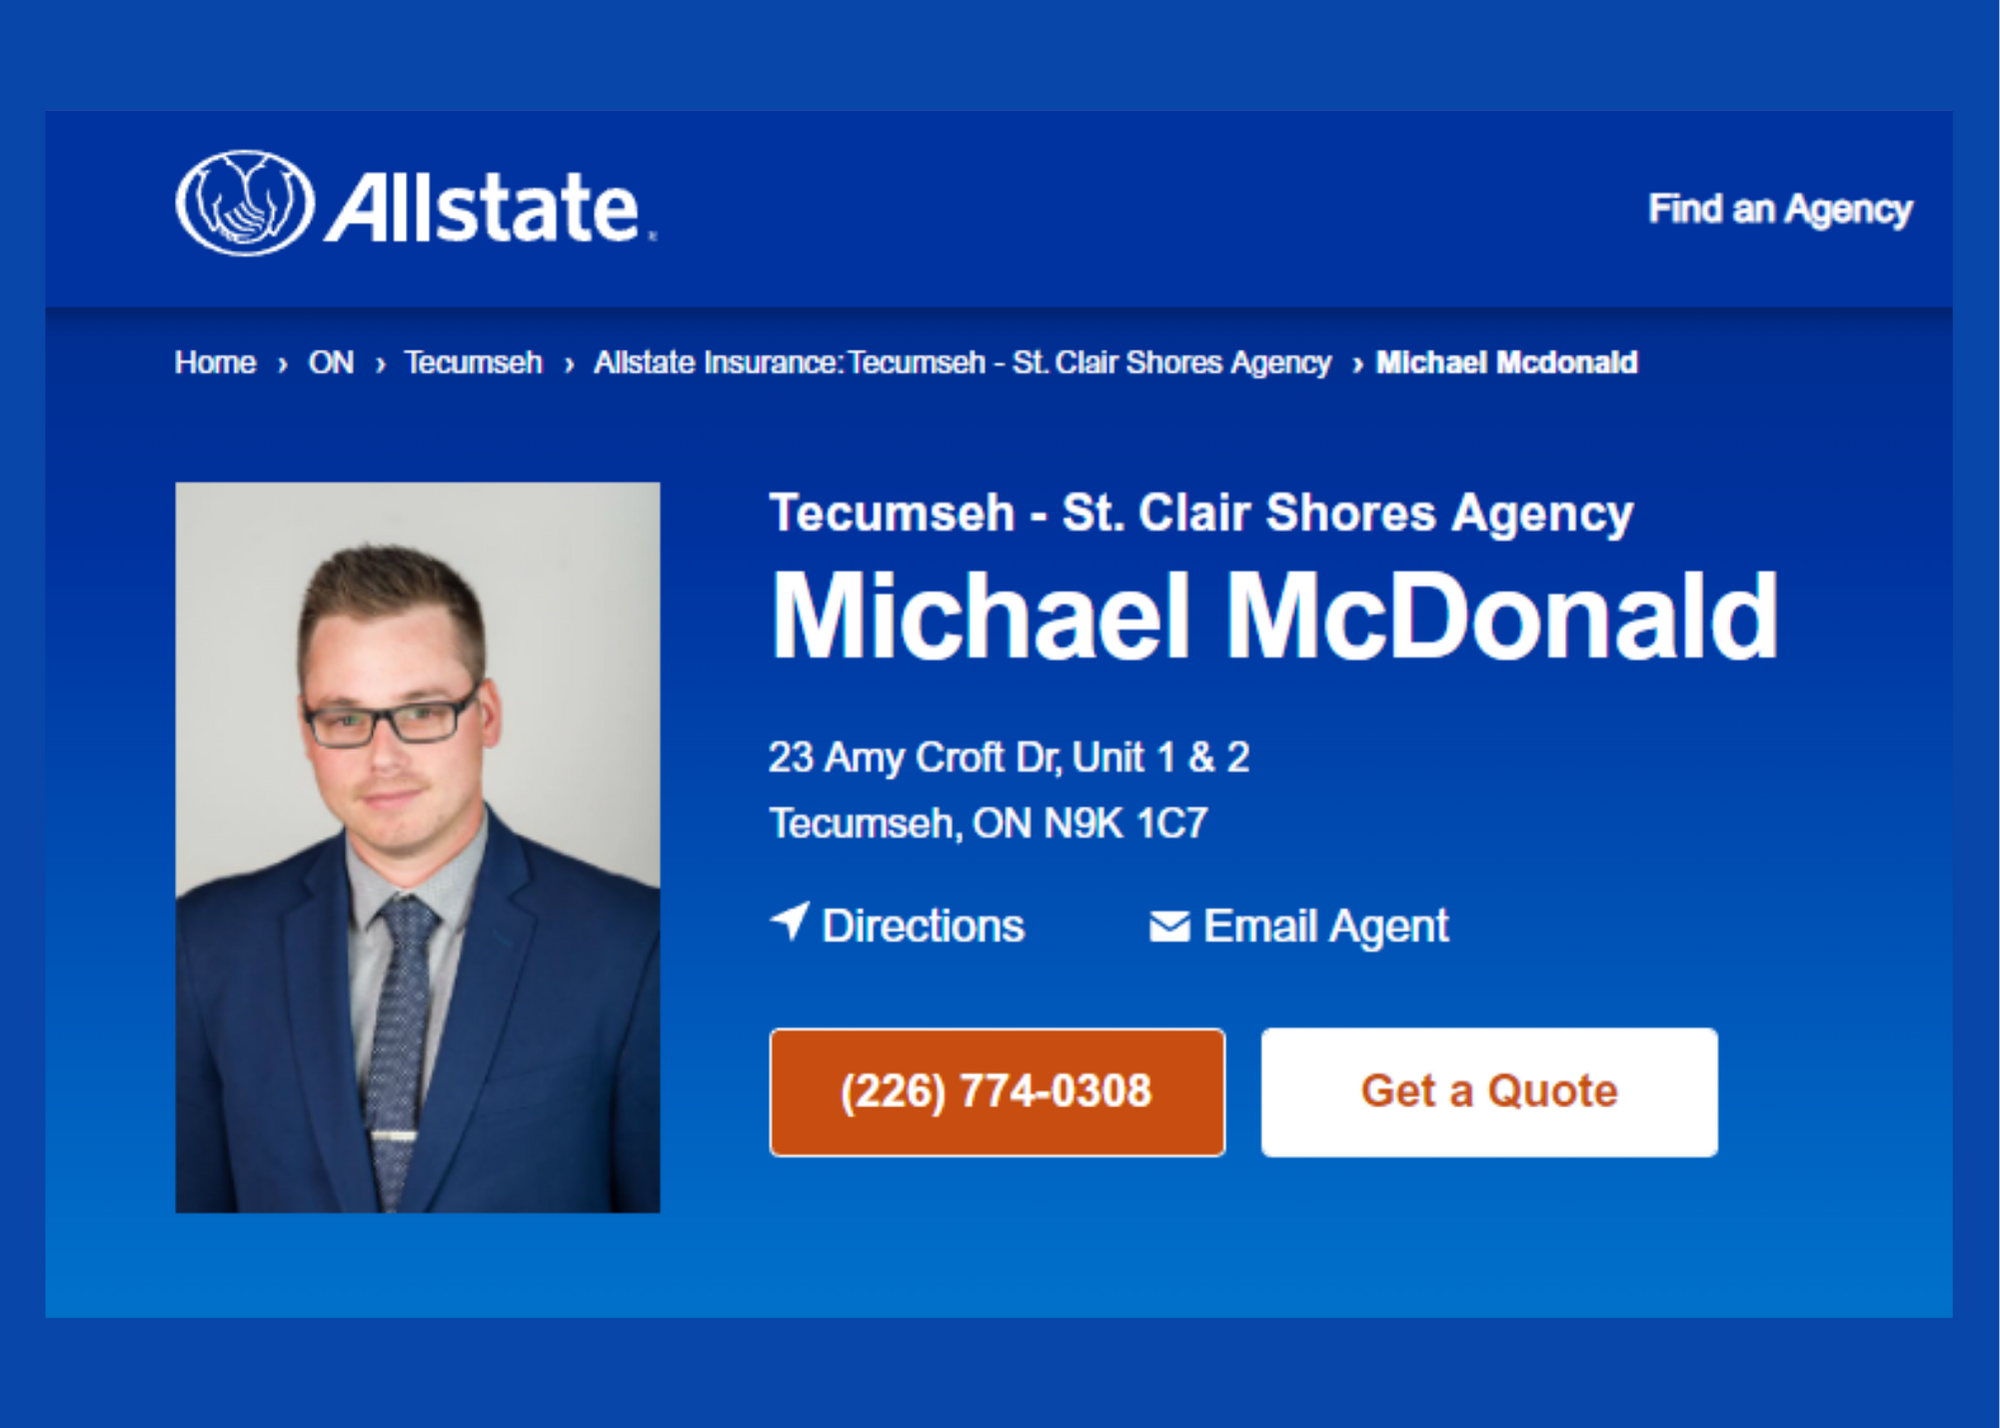 Michael McDonald Allstate Tecumseh St. Clair Shores Agency 